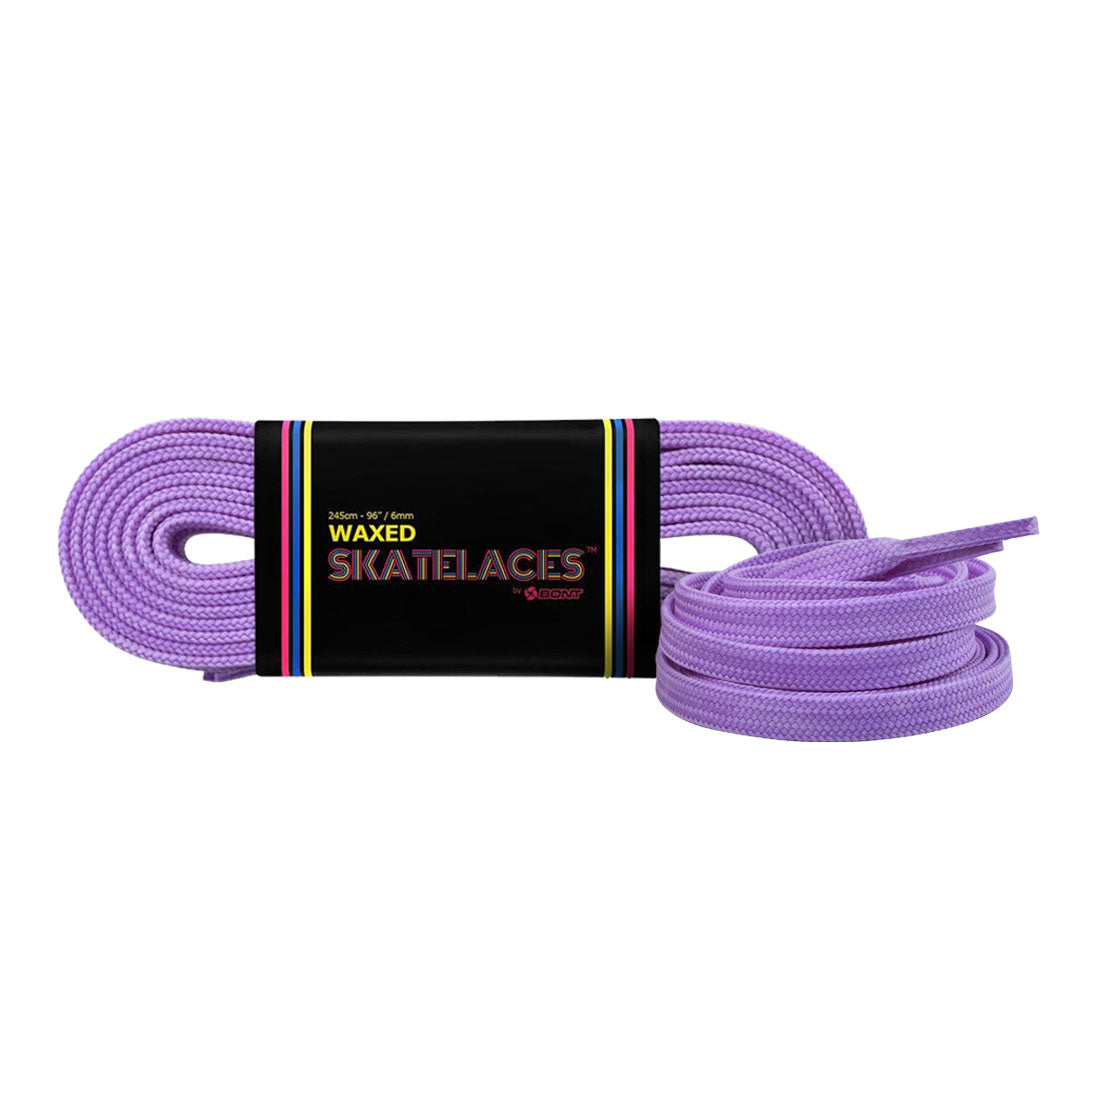 Bont Waxed 8mm Laces - 120cm/47in Amethyst Purple Laces